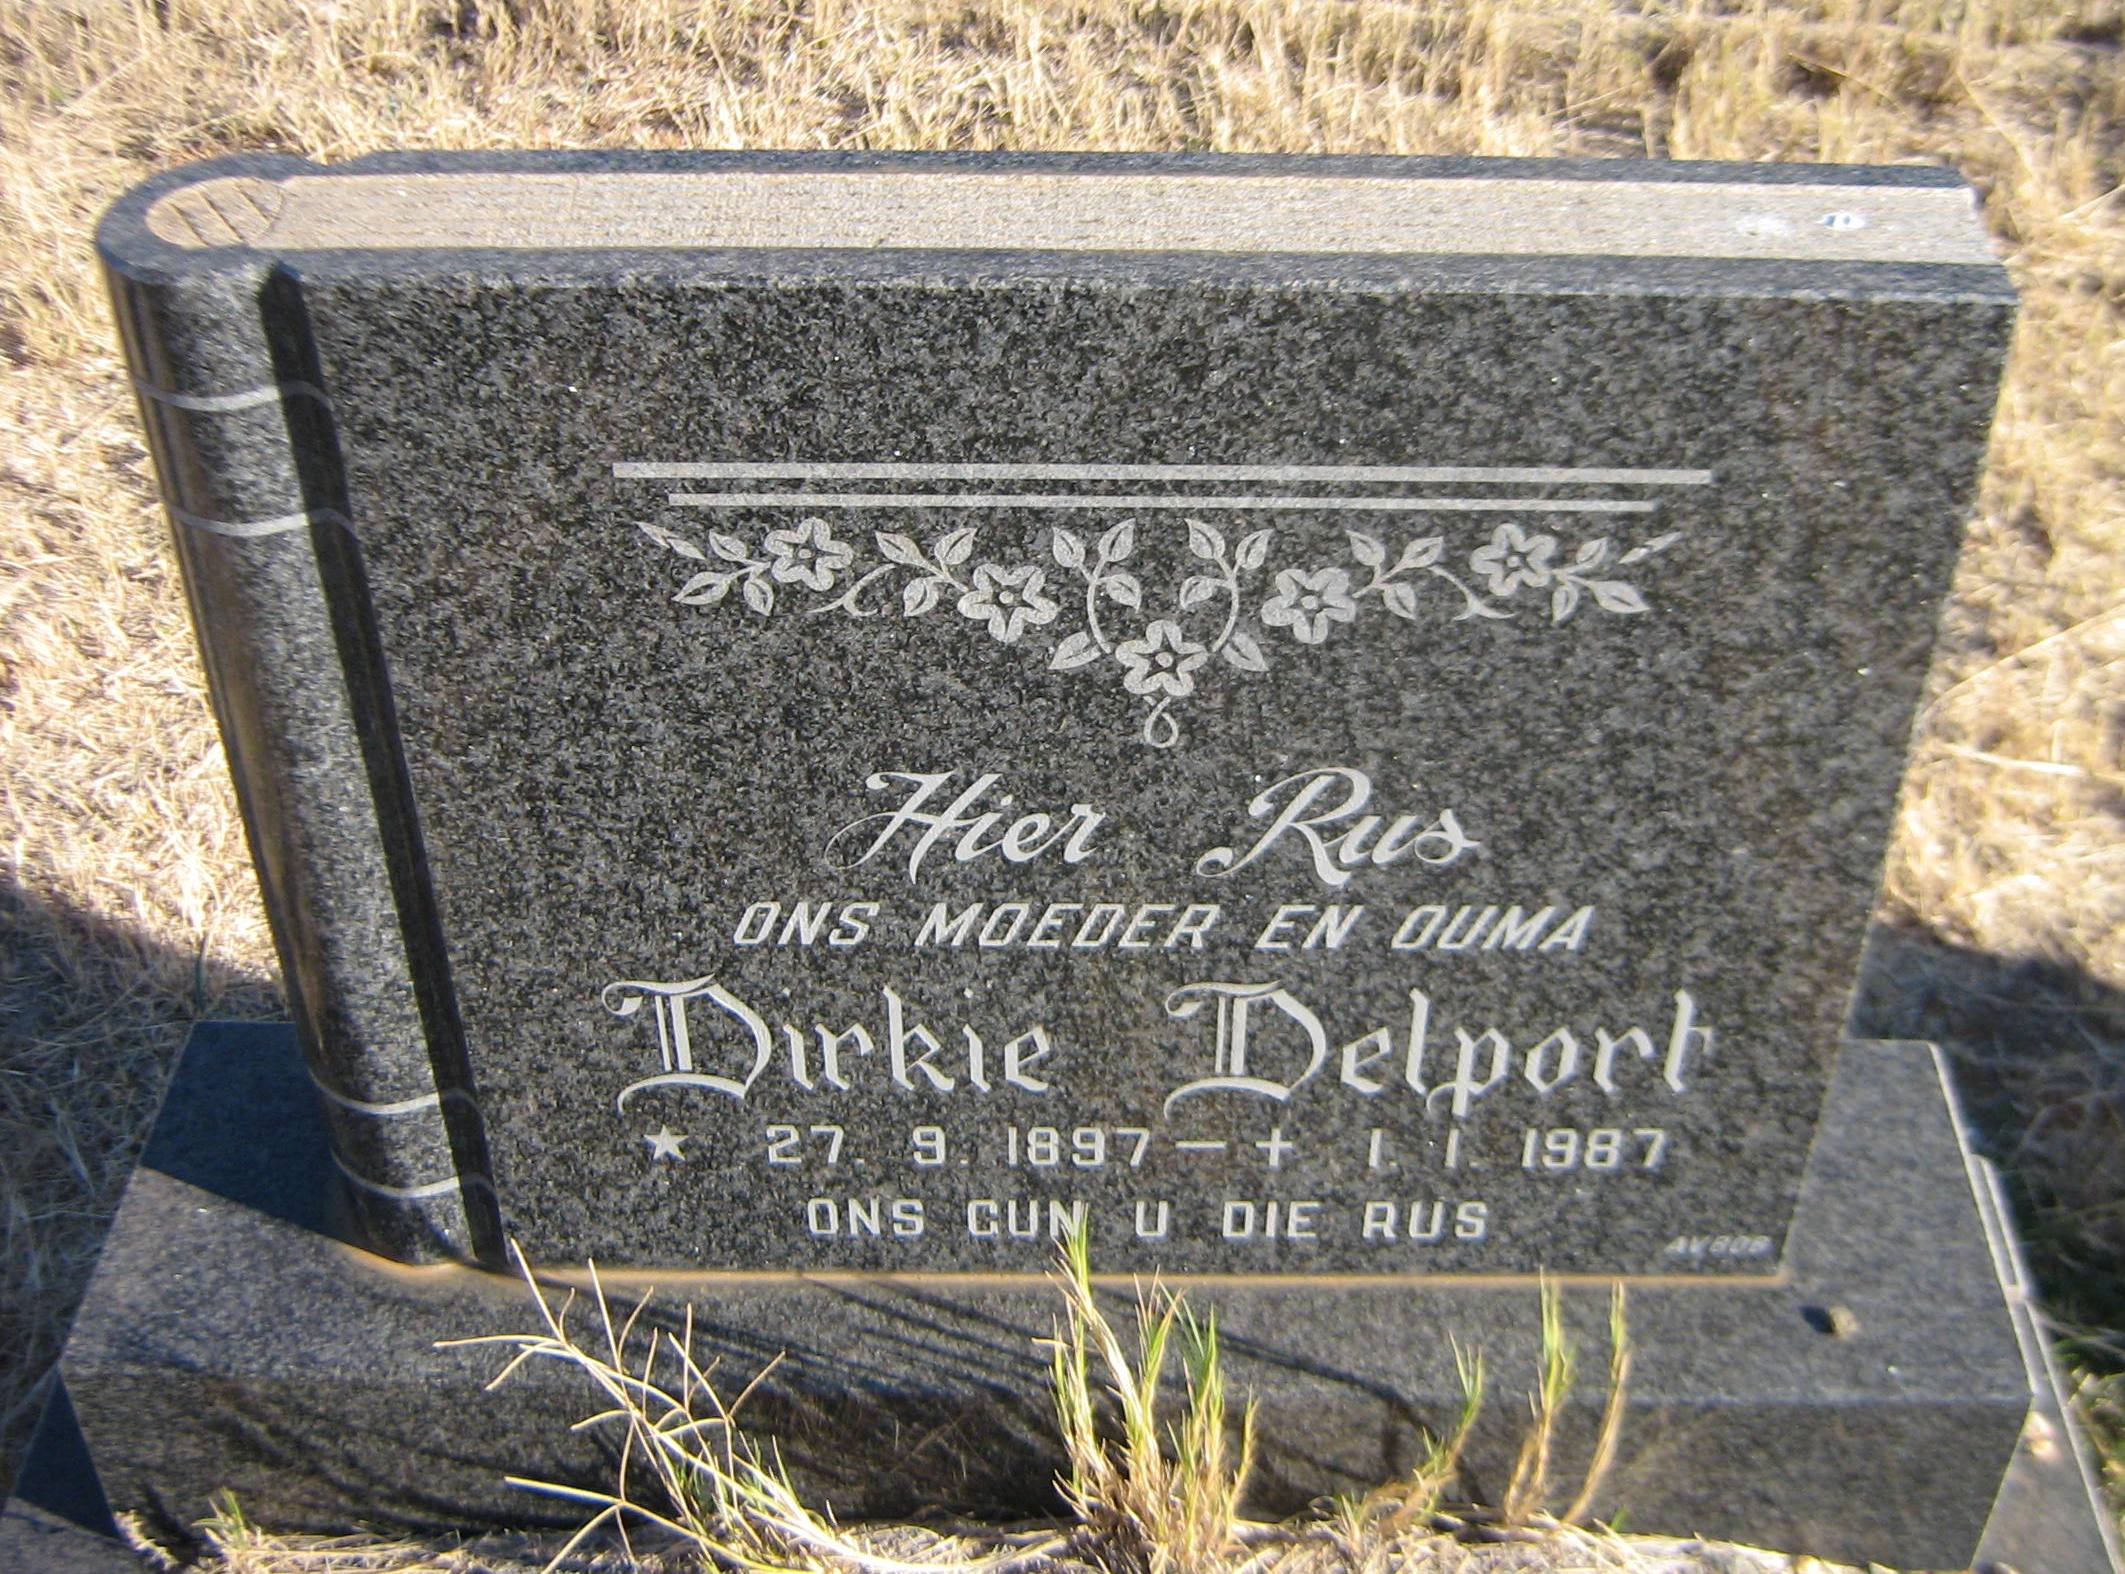 DELPORT Dirkie 1897-1987